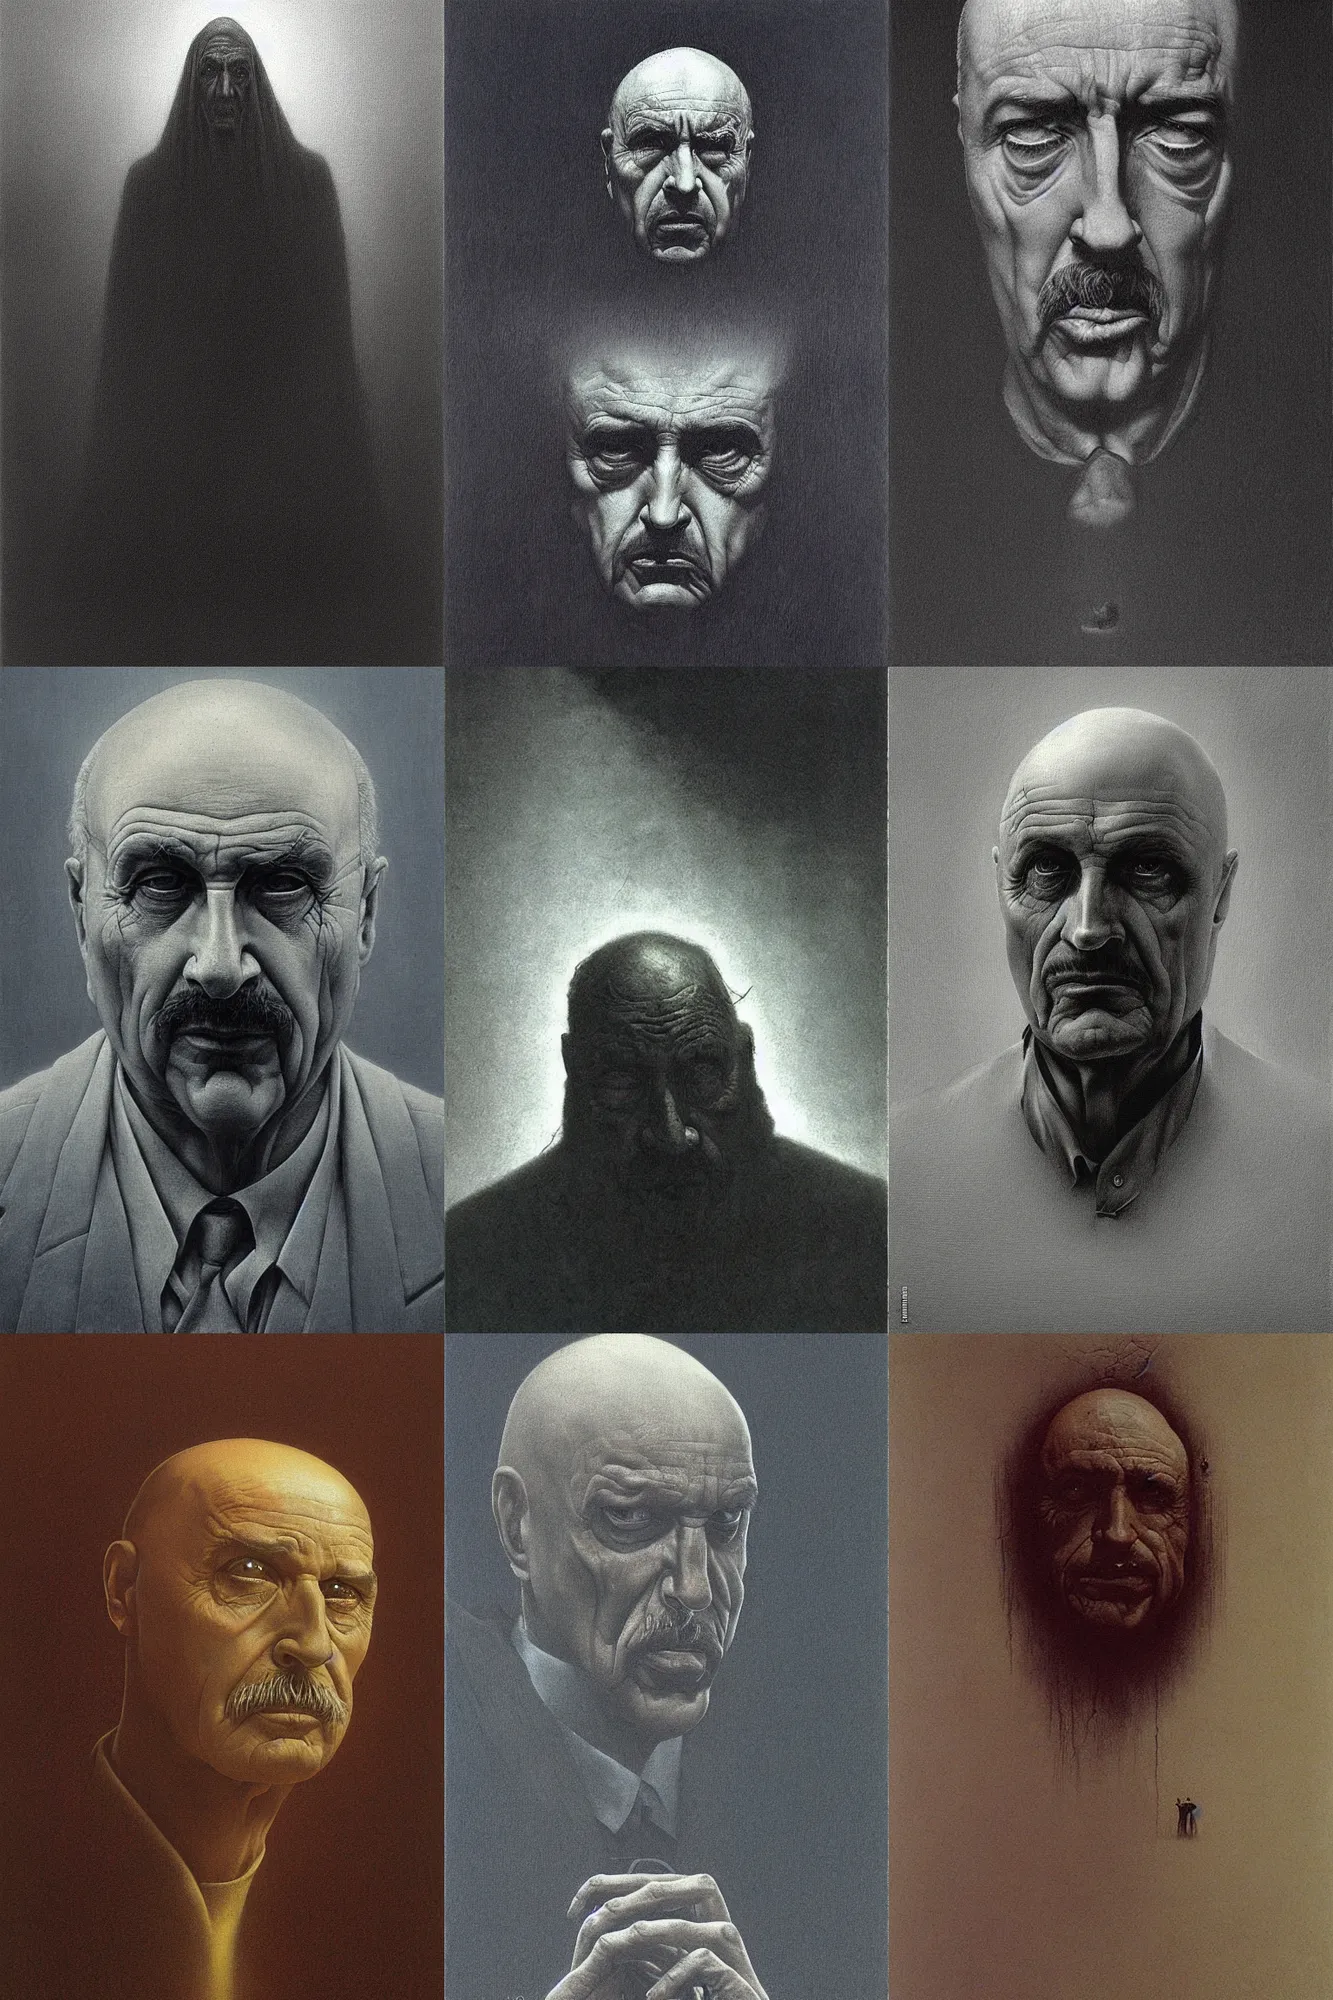 Prompt: Dr. Phil painted by Zdzisław Beksiński, highly detailed, dark, moody, gloomy, creepy, high quality